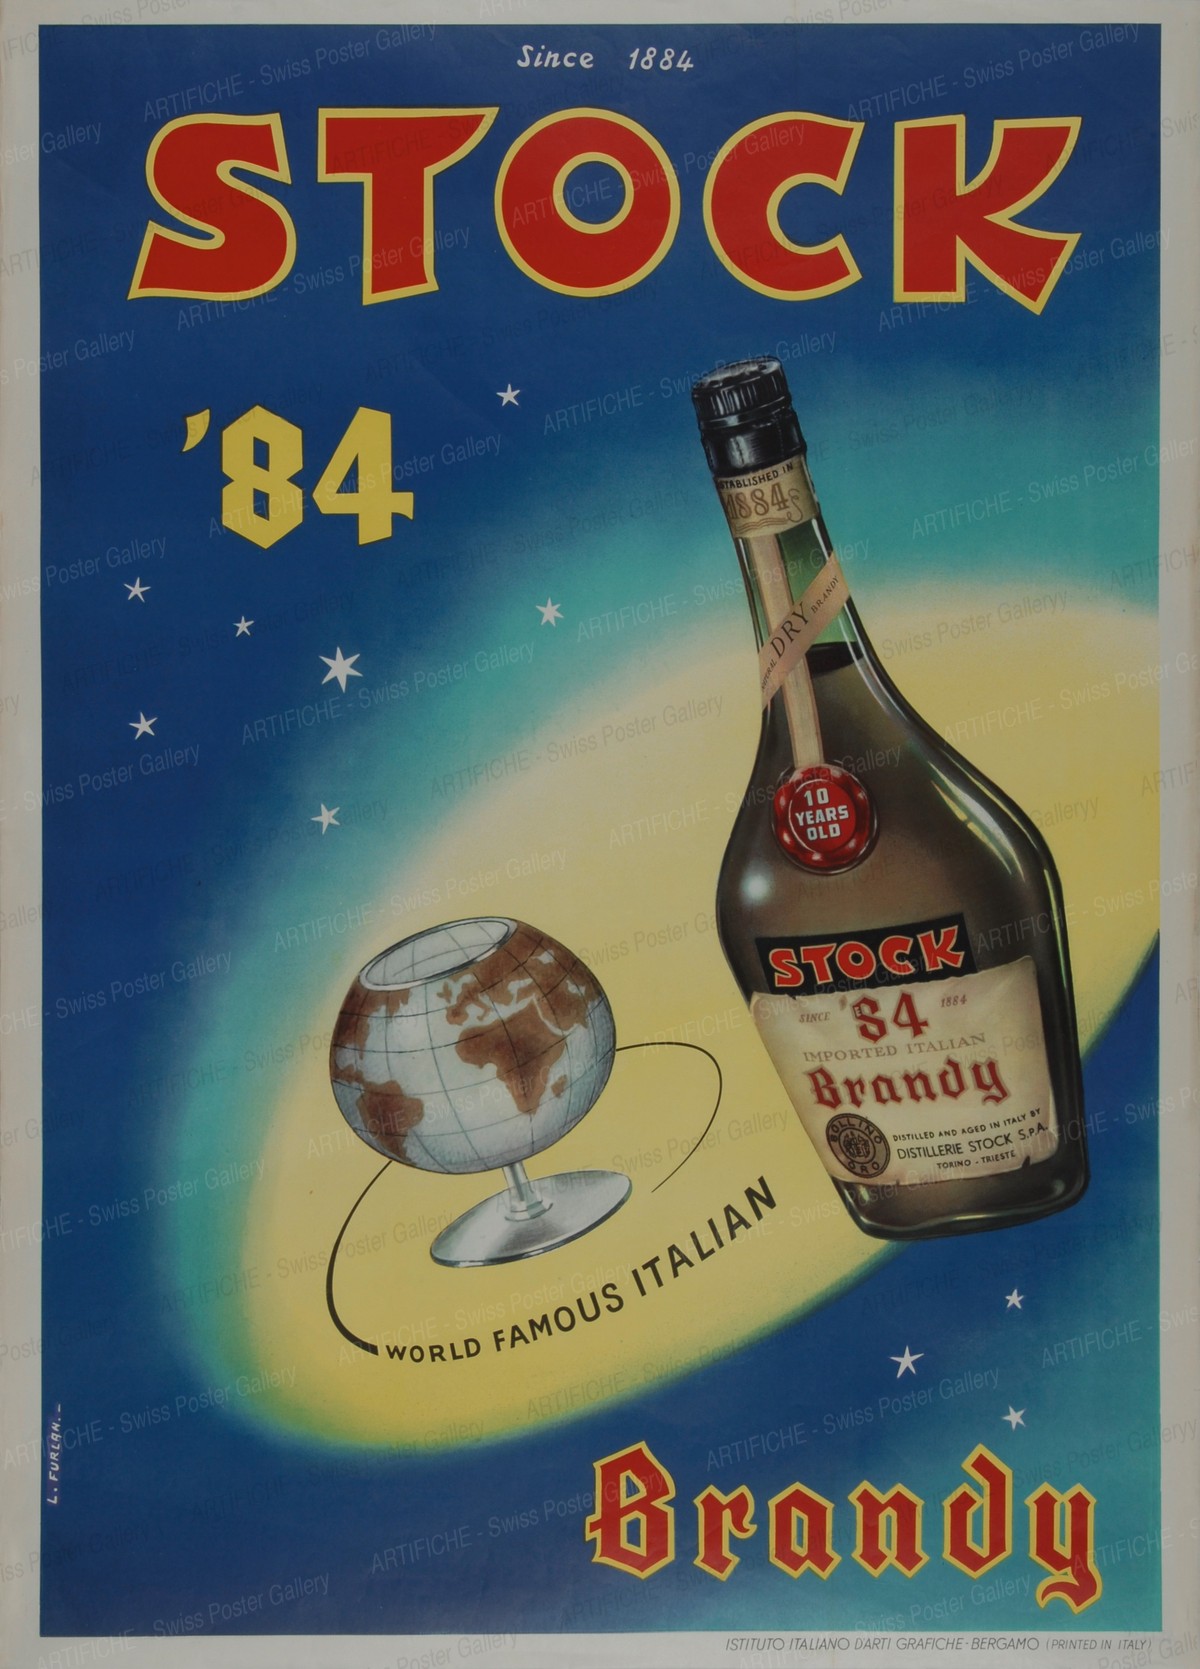 Stock Aperitivo – World famous Italian Brandy, L. Furlan